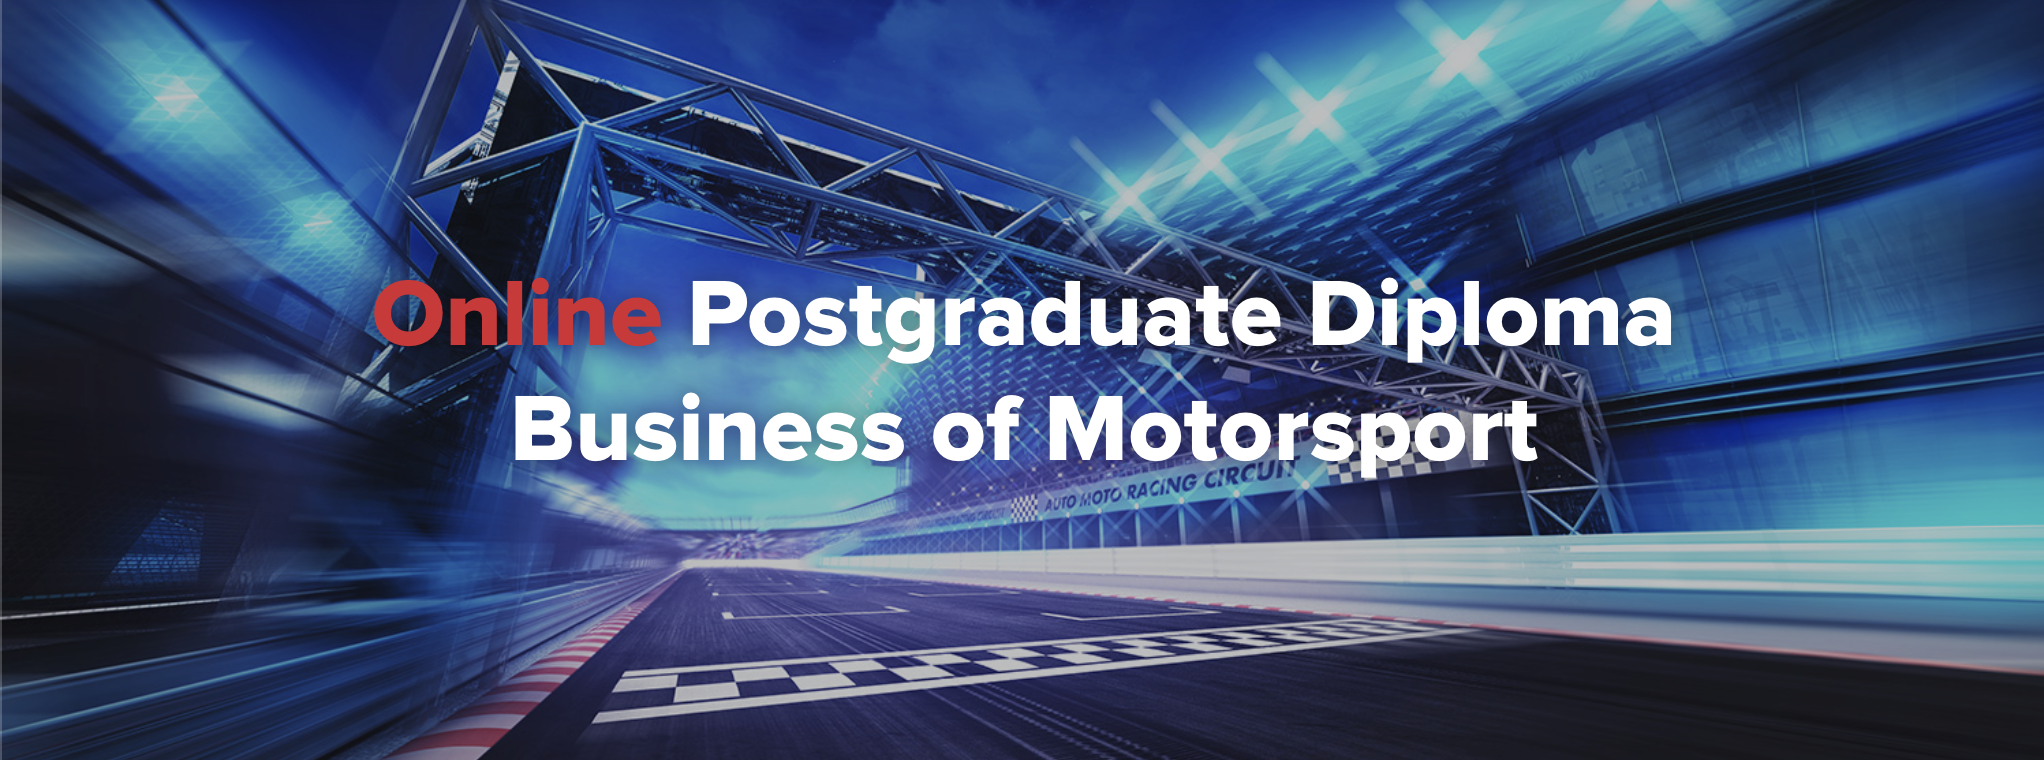 Online Postgraduate Diploma Business of Motorsport